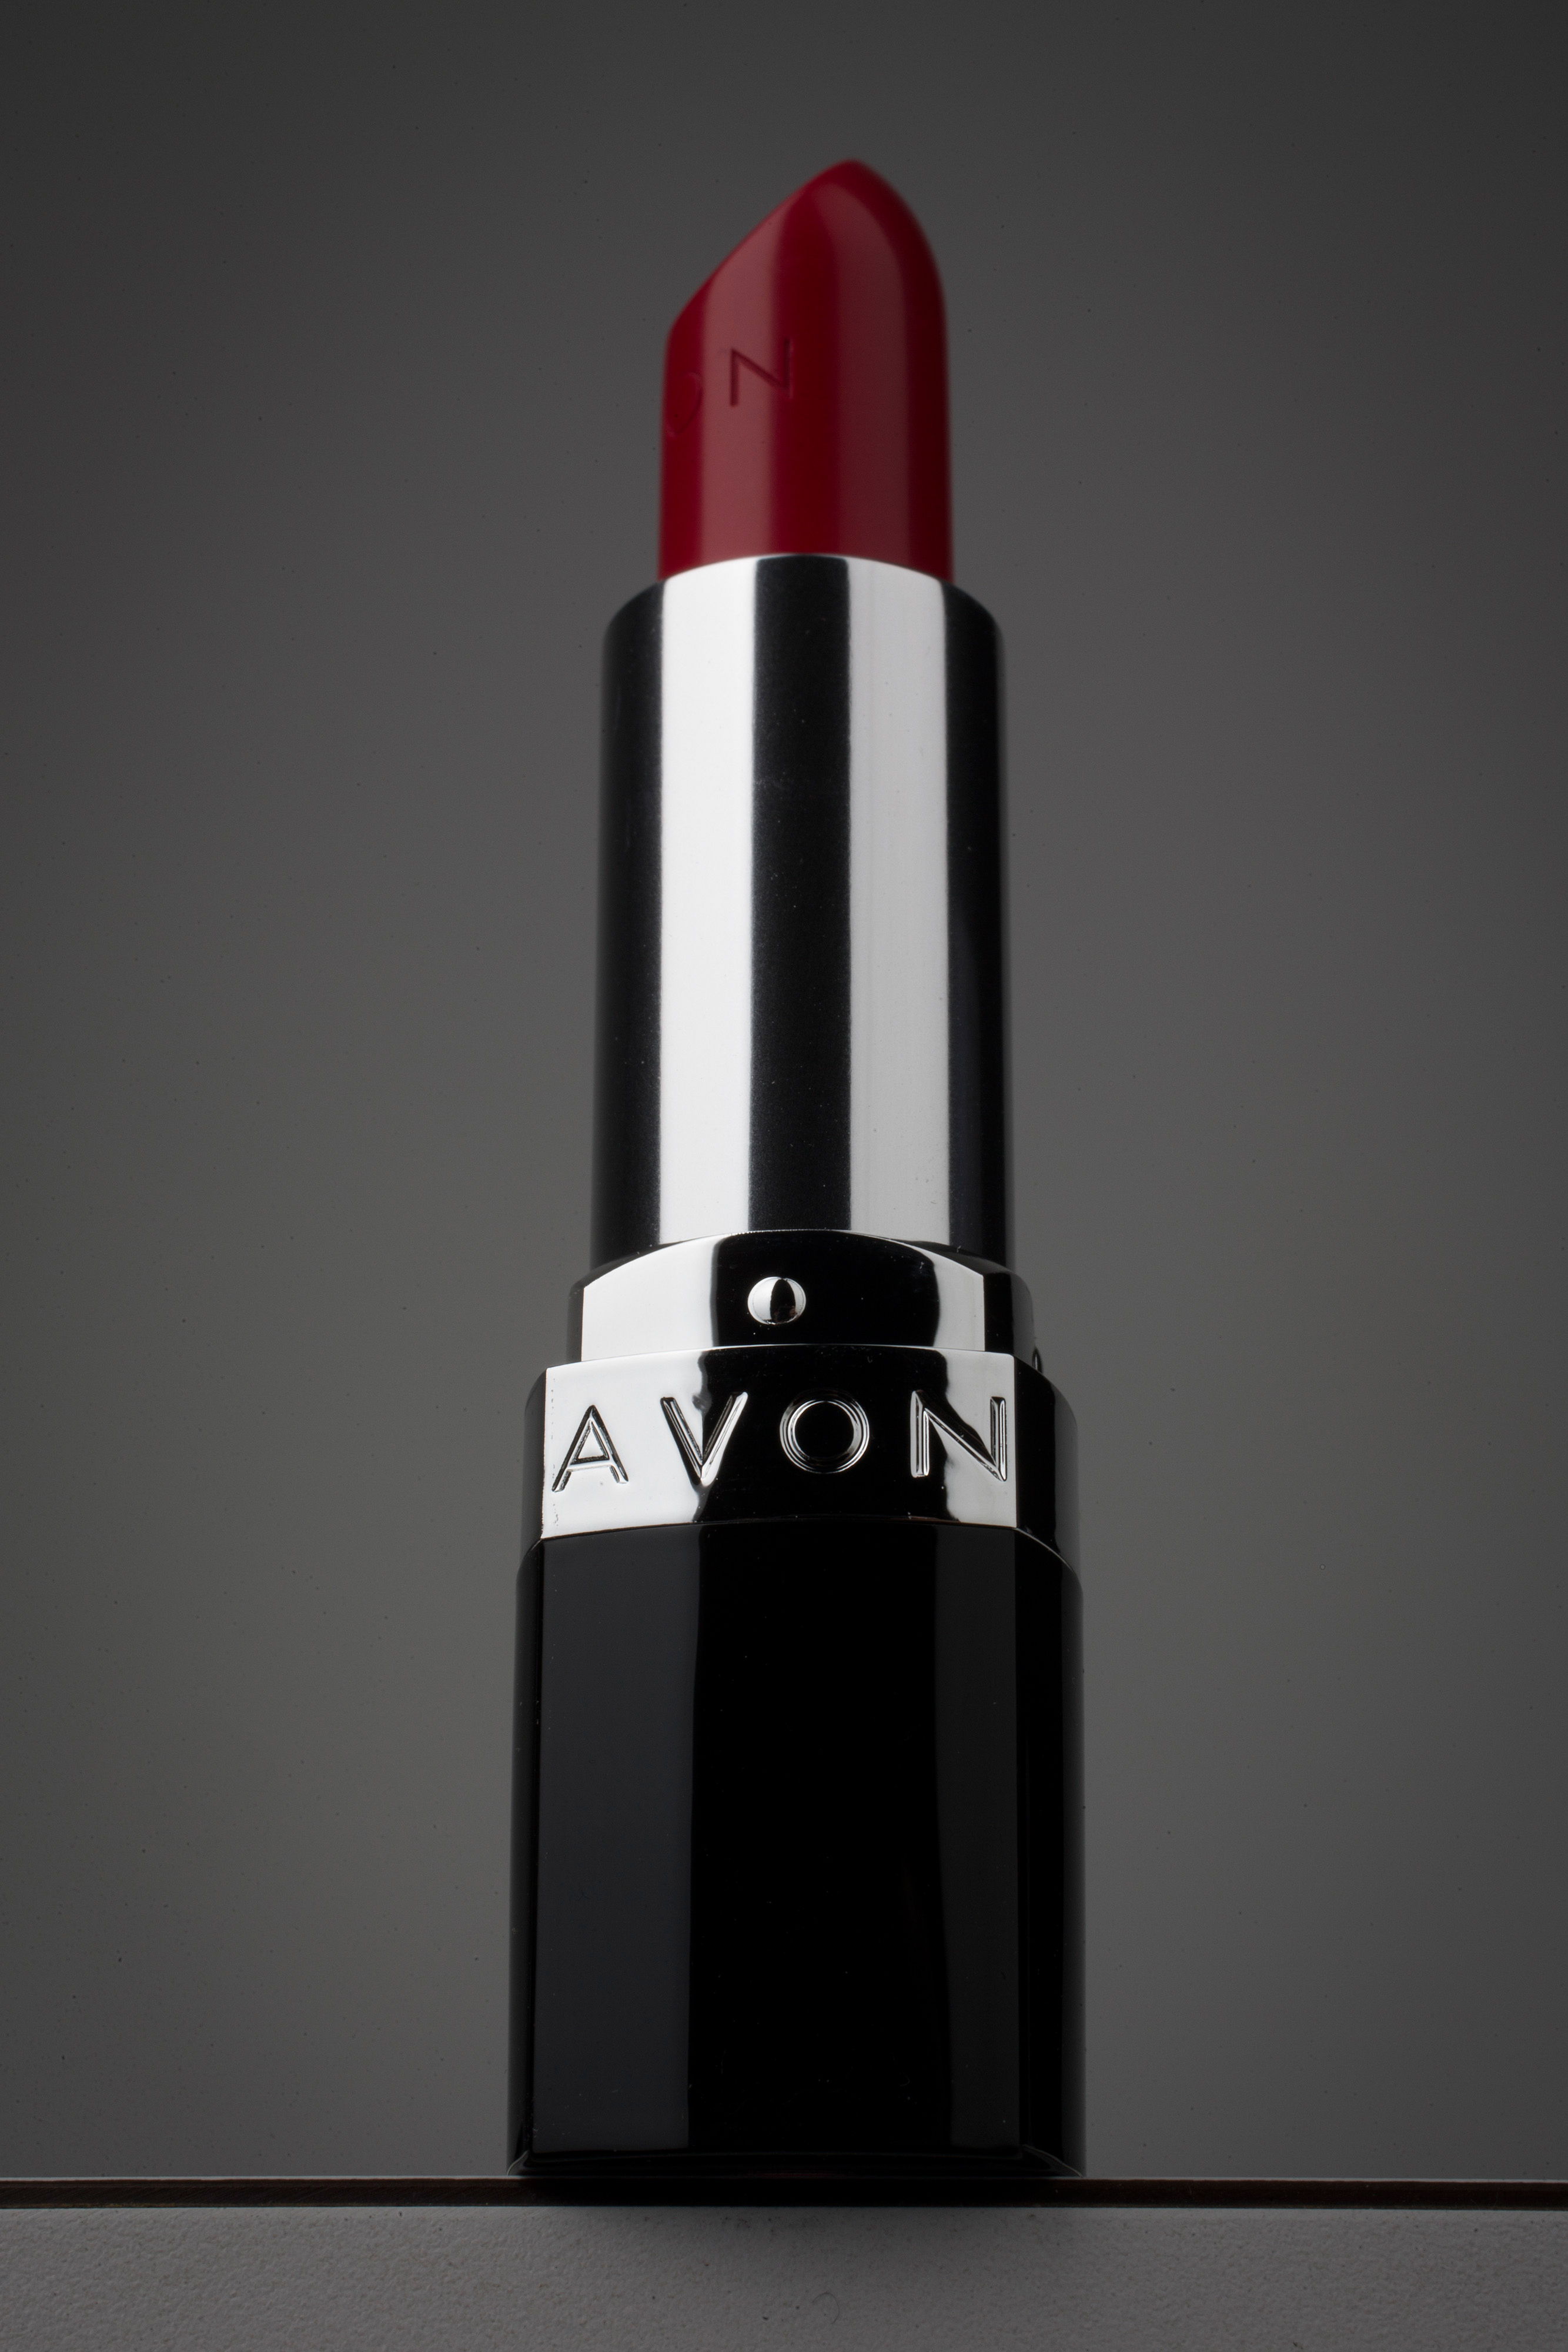 An Avon Products Inc. lipstick.